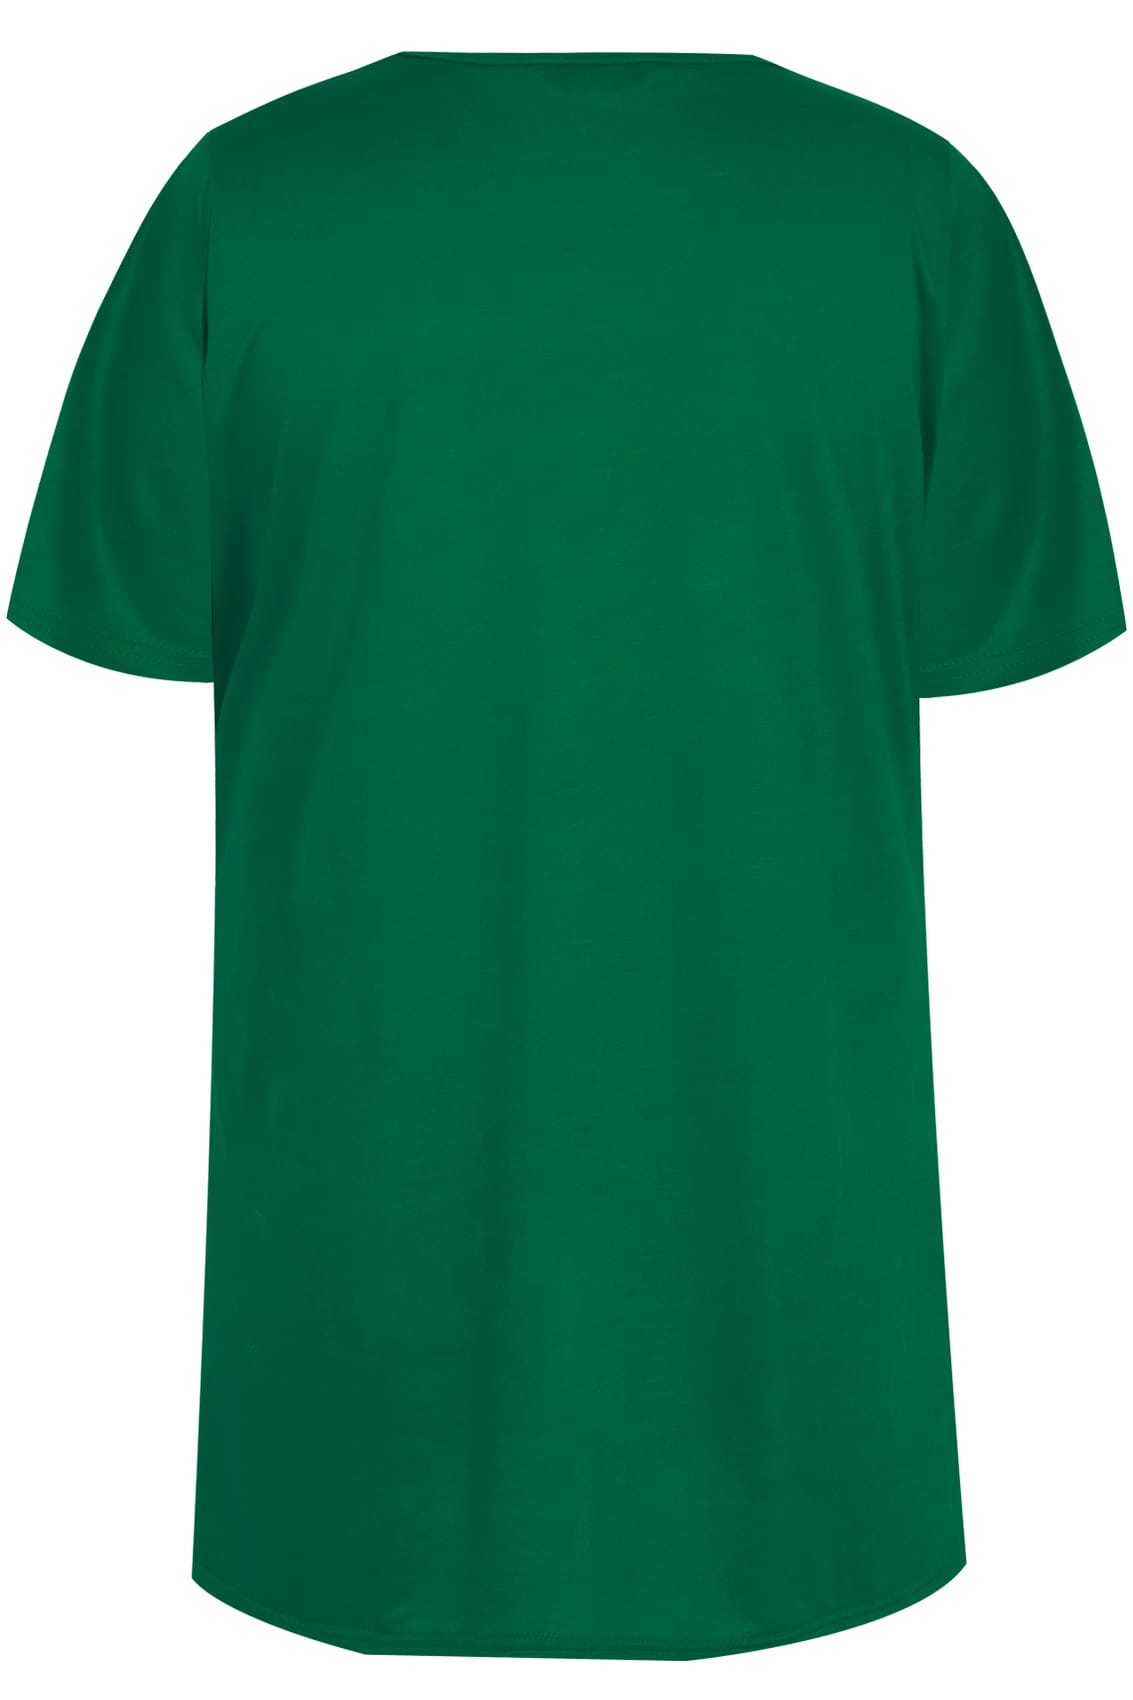 Green Oversized Varsity 58 Print T-Shirt plus size 16 to 32